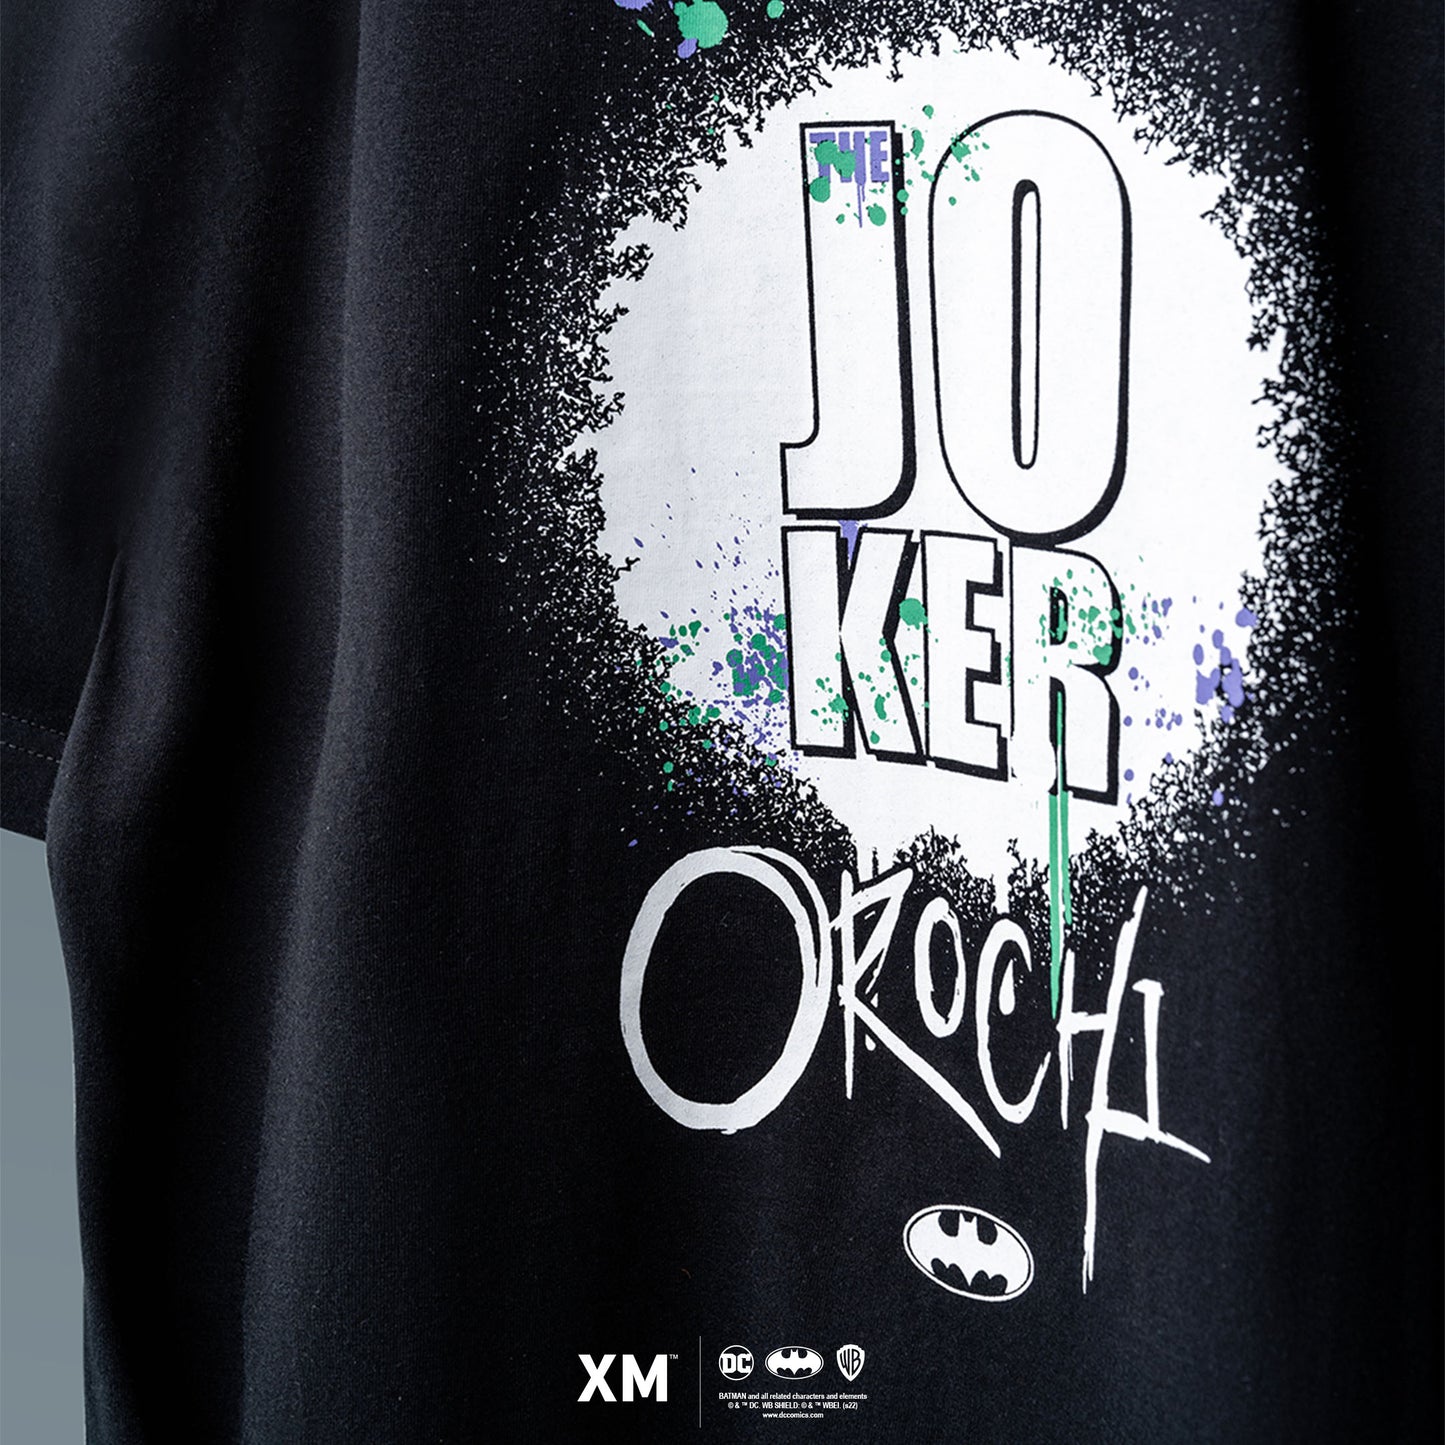 Batman Samurai Collection – Joker Orochi-Inspired Logo (Black) Tshirt